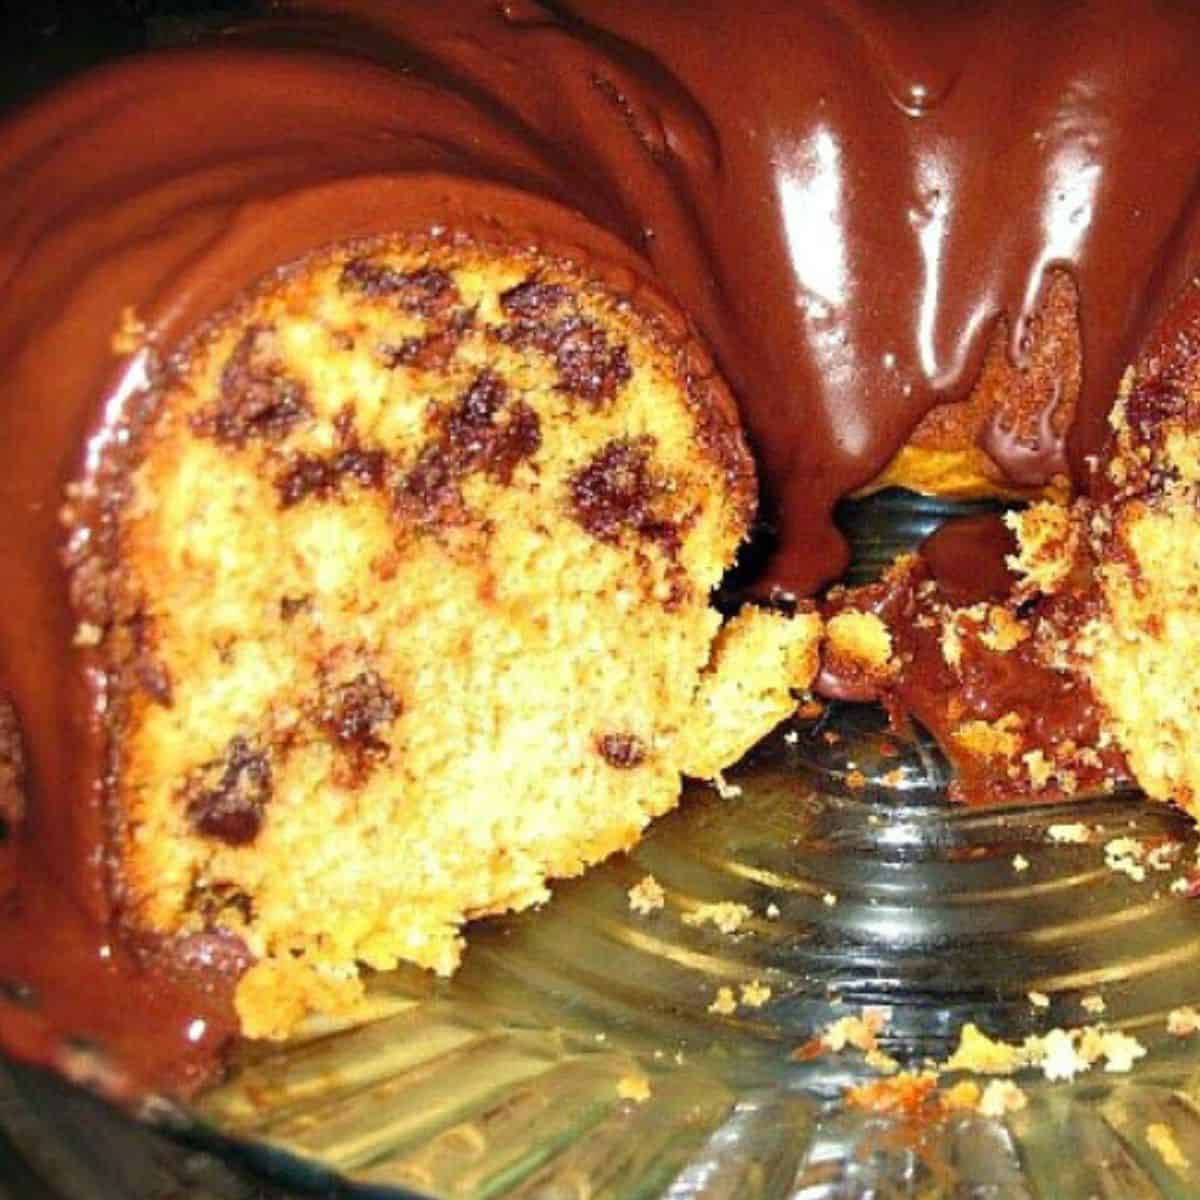 Peanut Butter cake imx cake inside view.